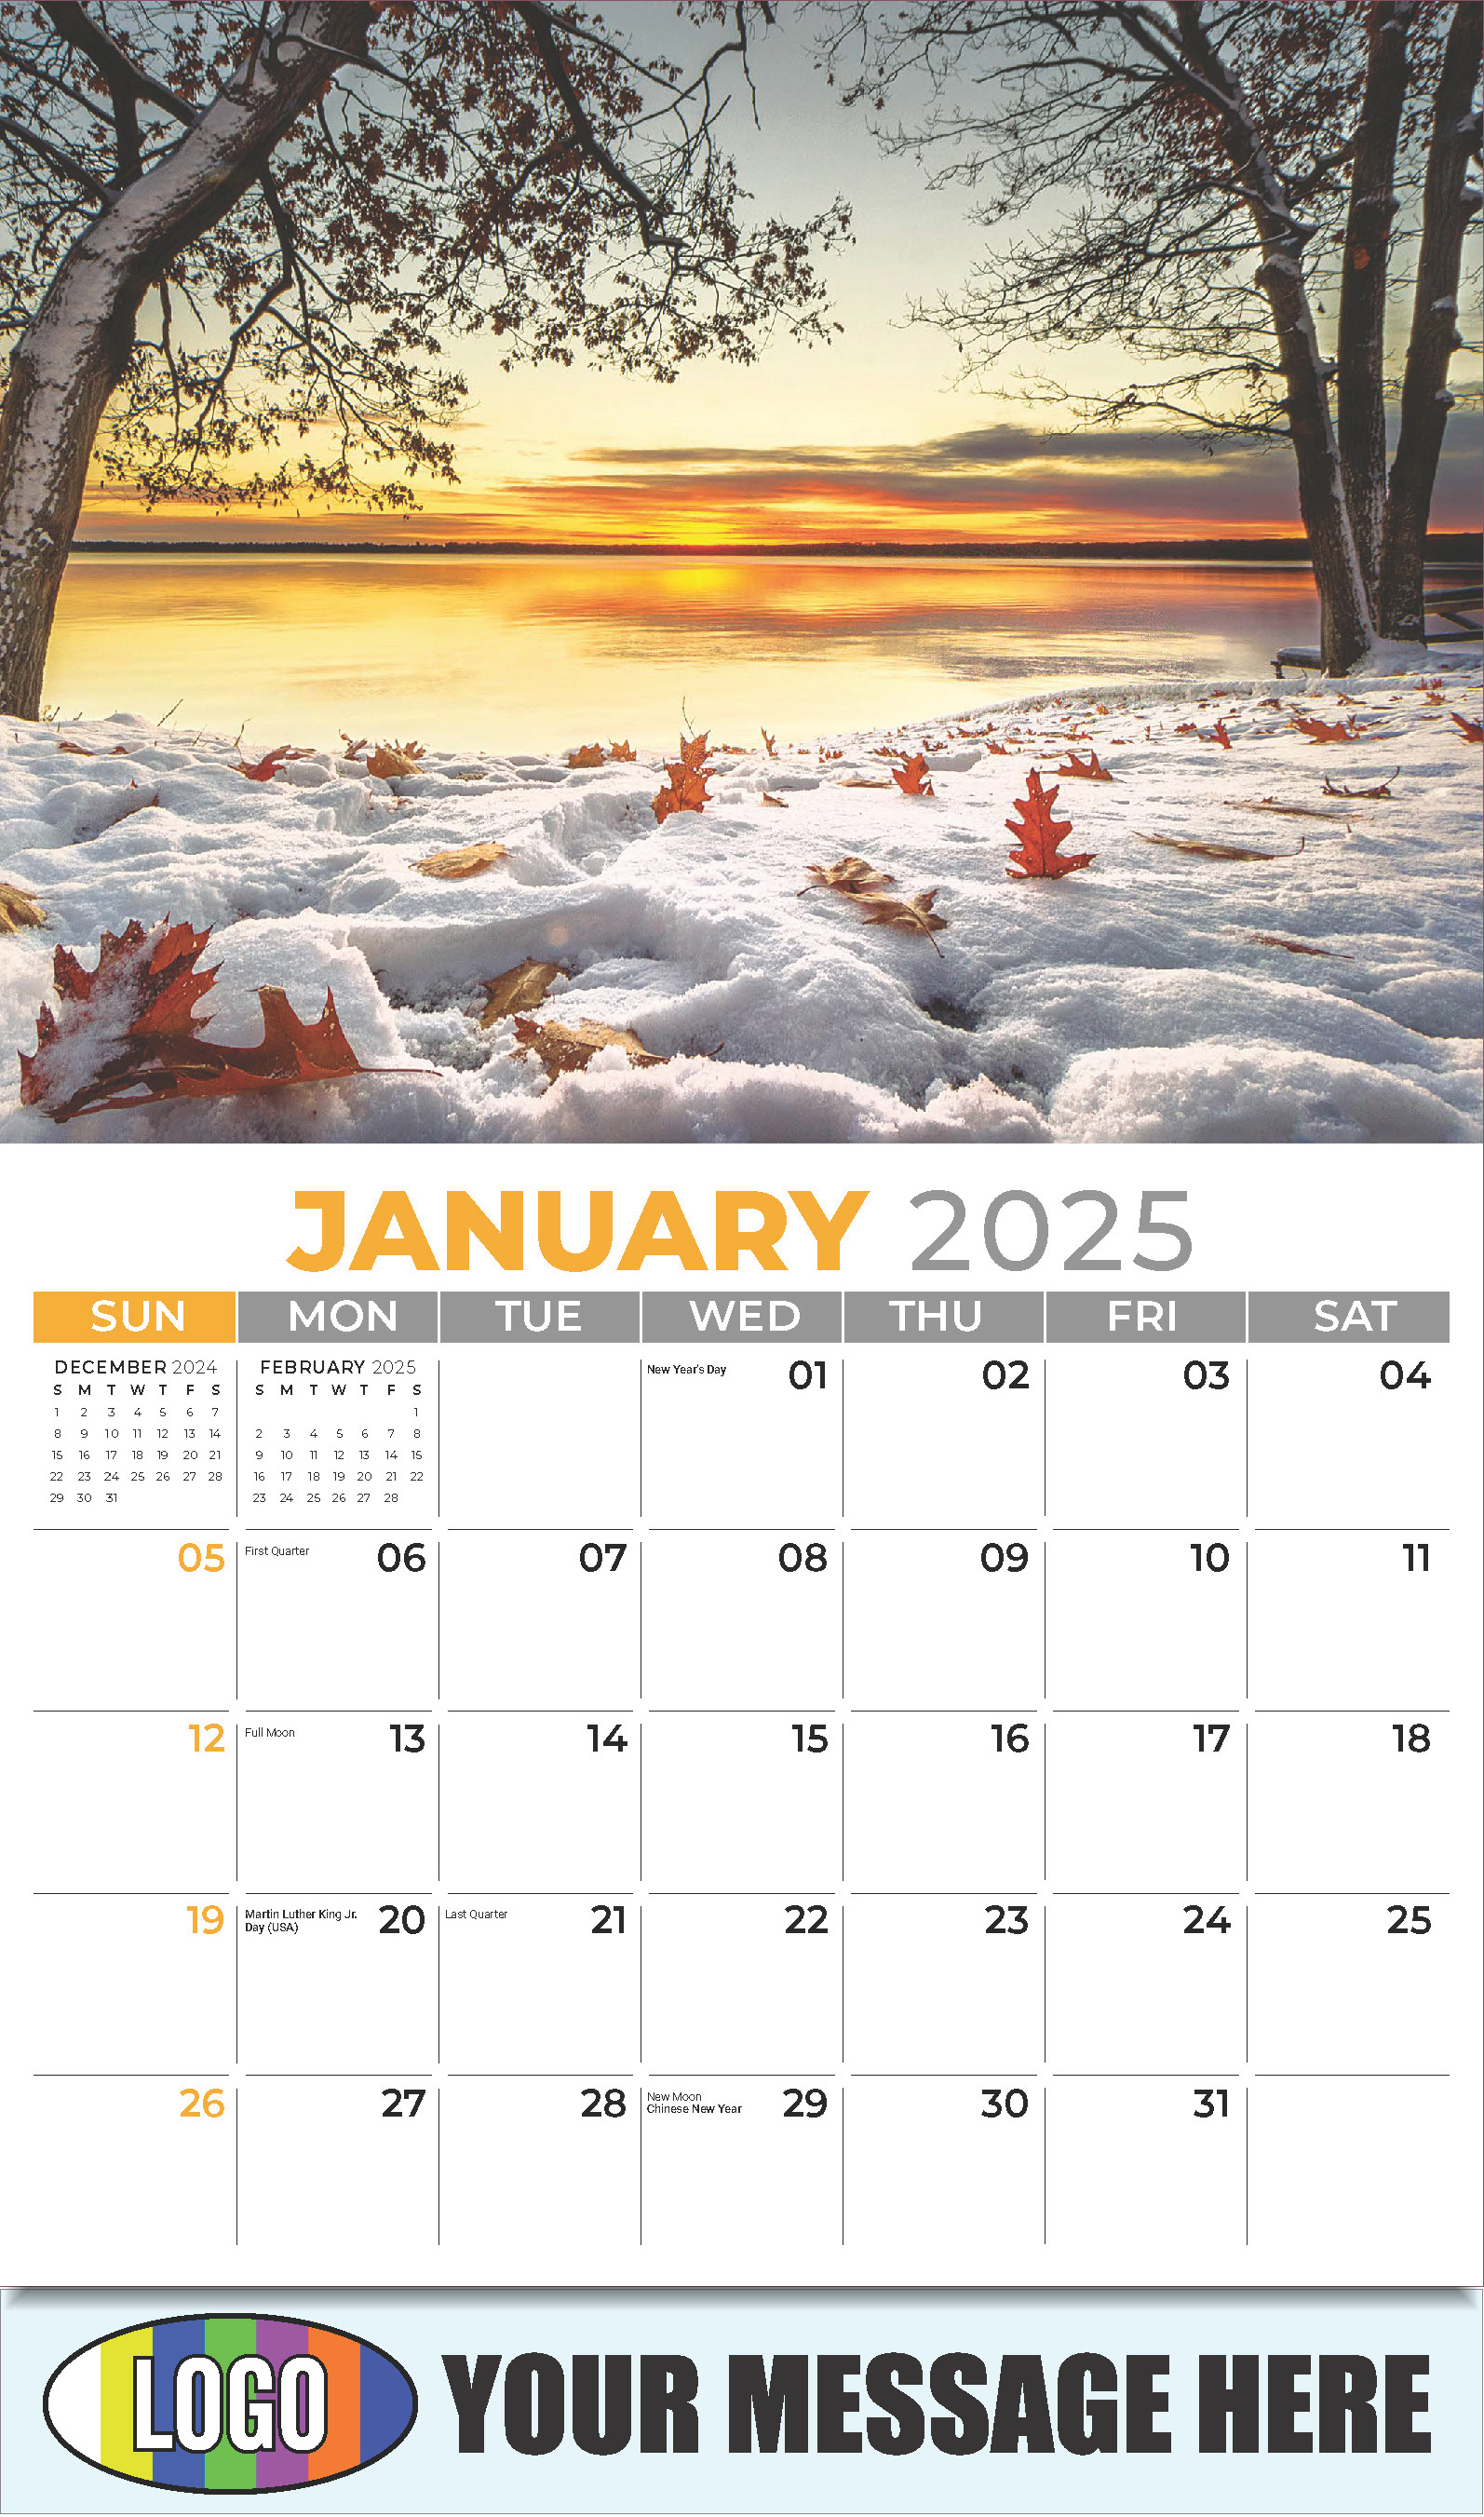 Country Spirit 2025 Business Advertising Calendar - January